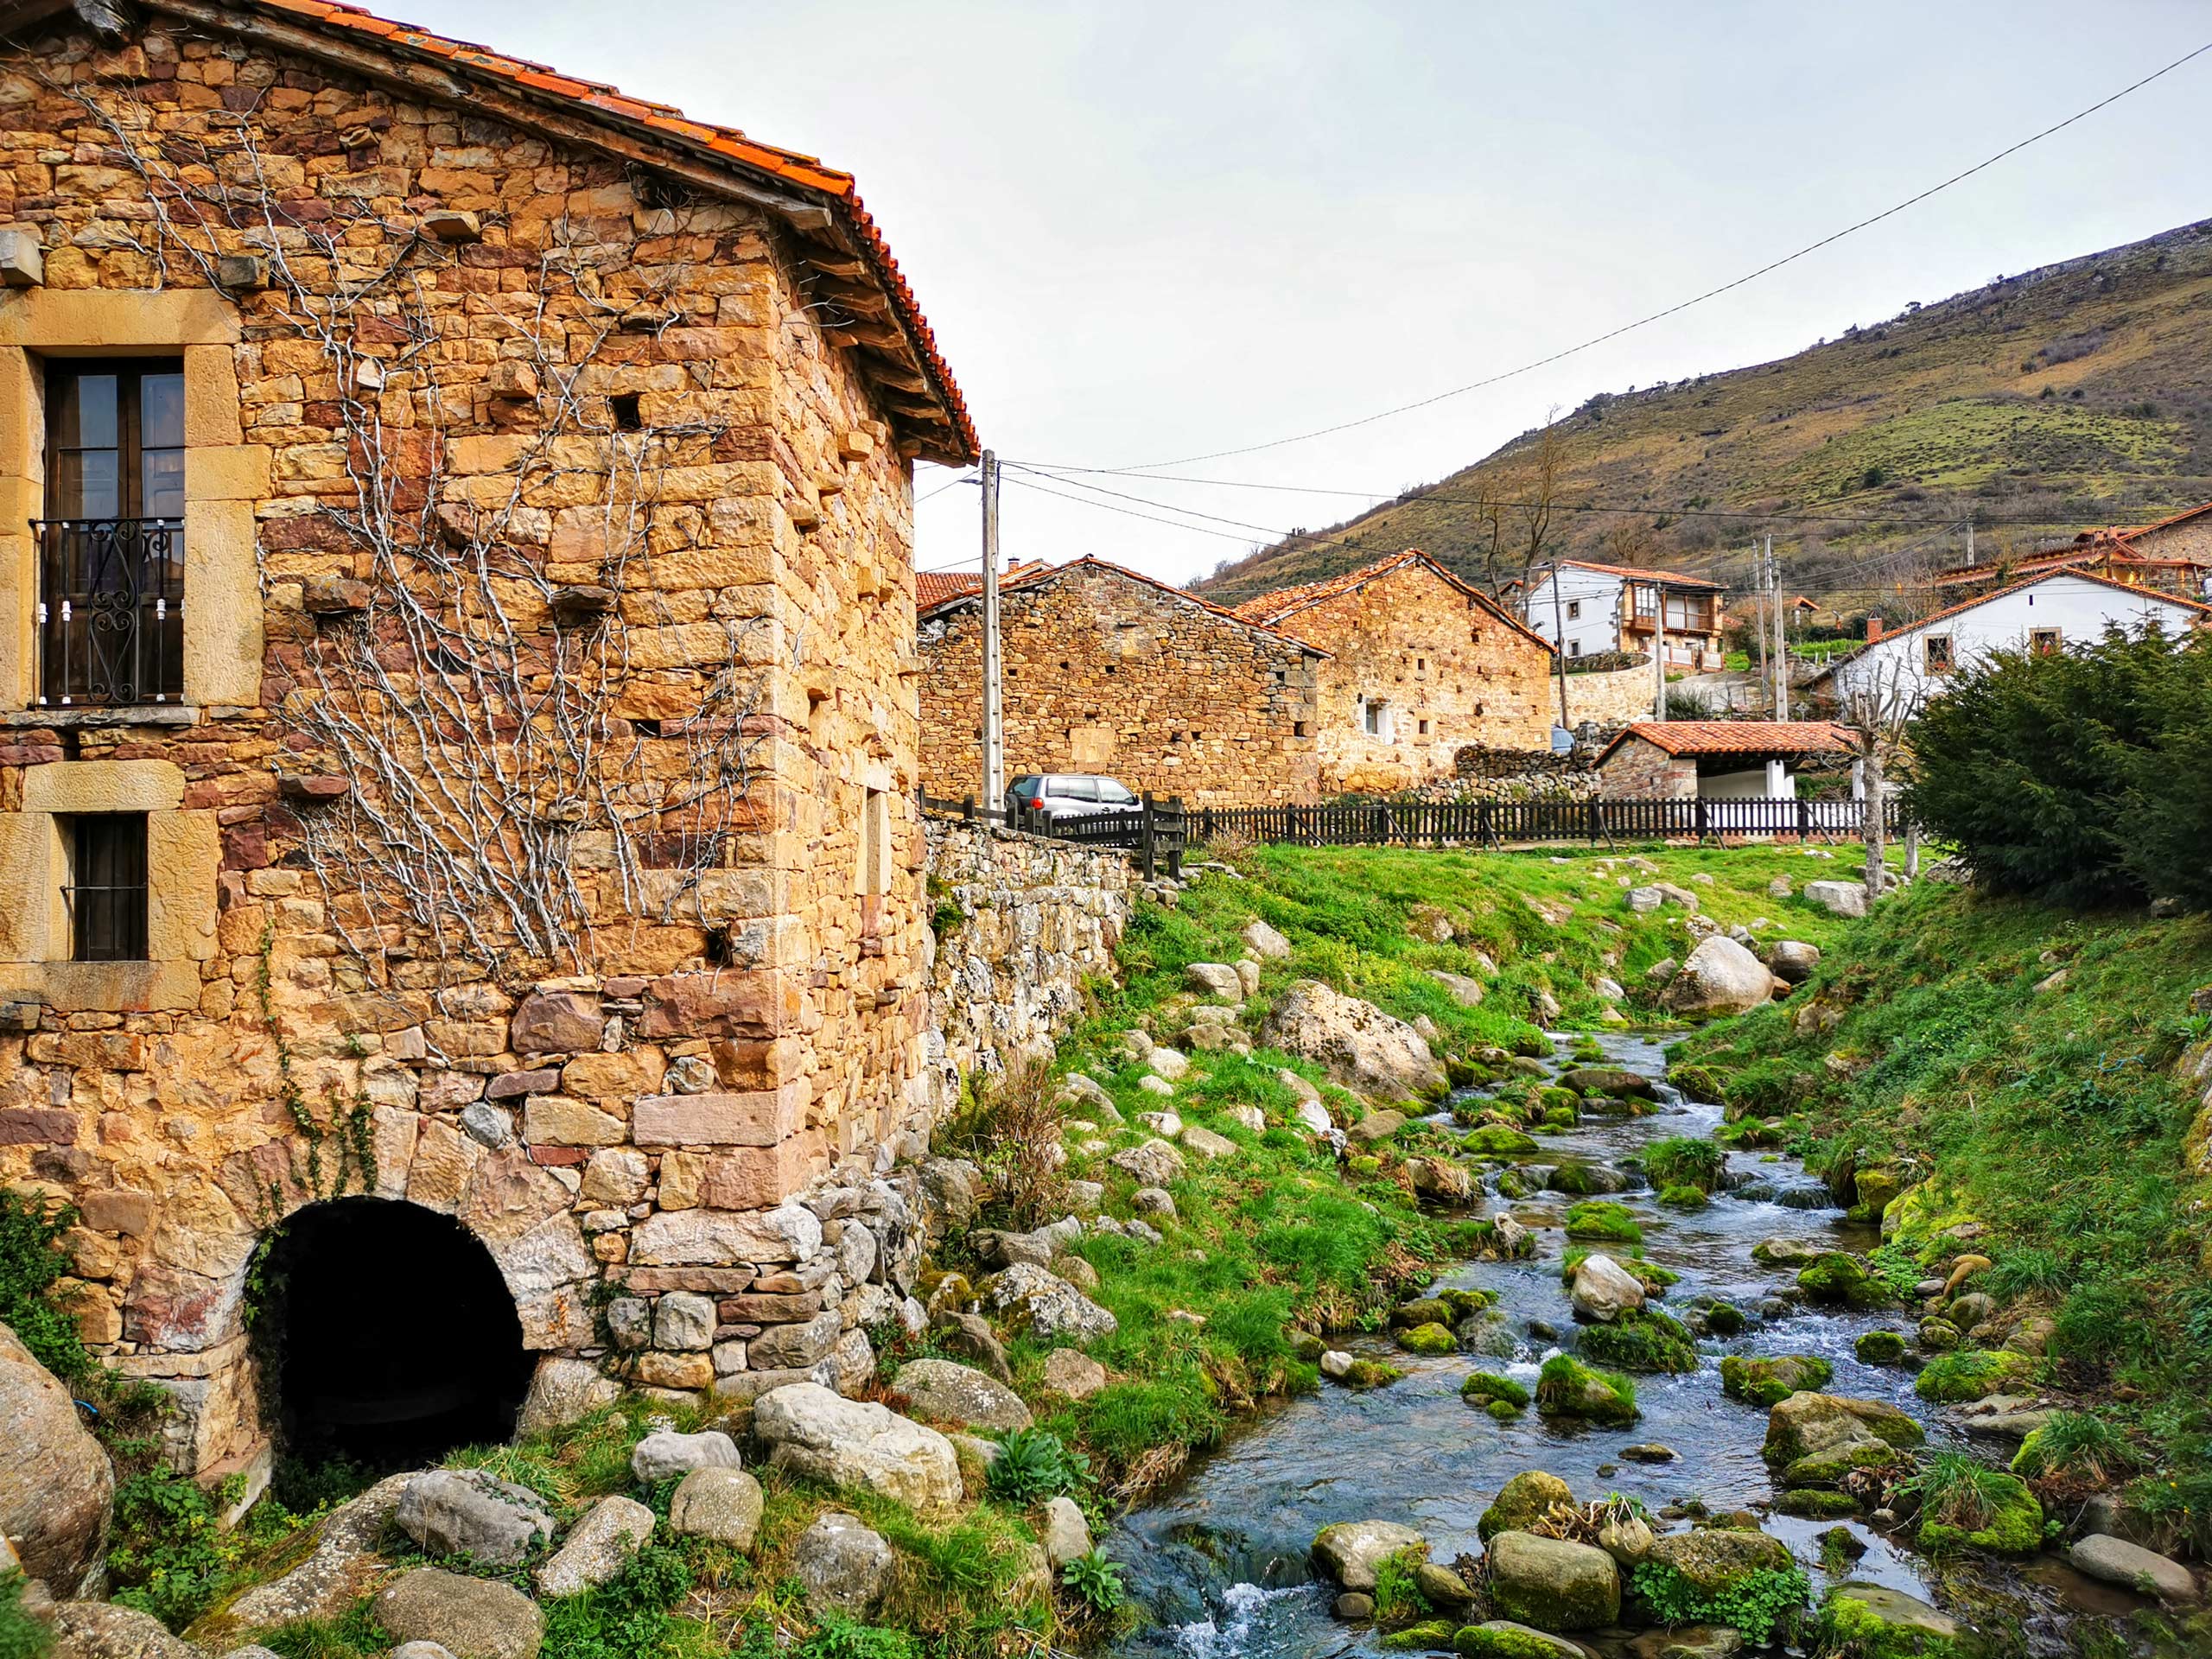 Camino Lebaniego creek running through farming village of stone houses hiking walking tour Spain